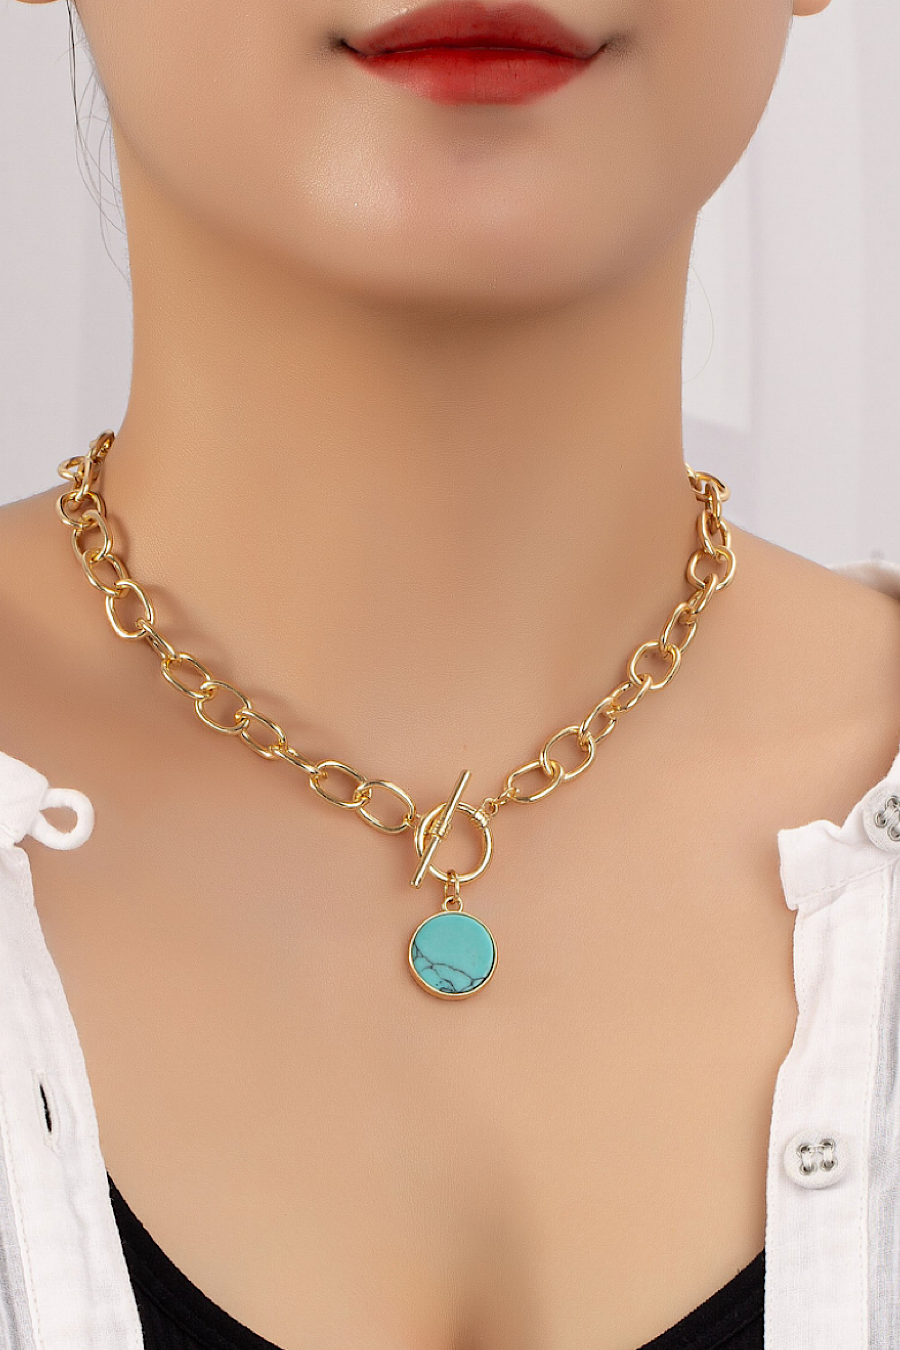 Semi Precious Stone Necklace Turquoise or Onyx